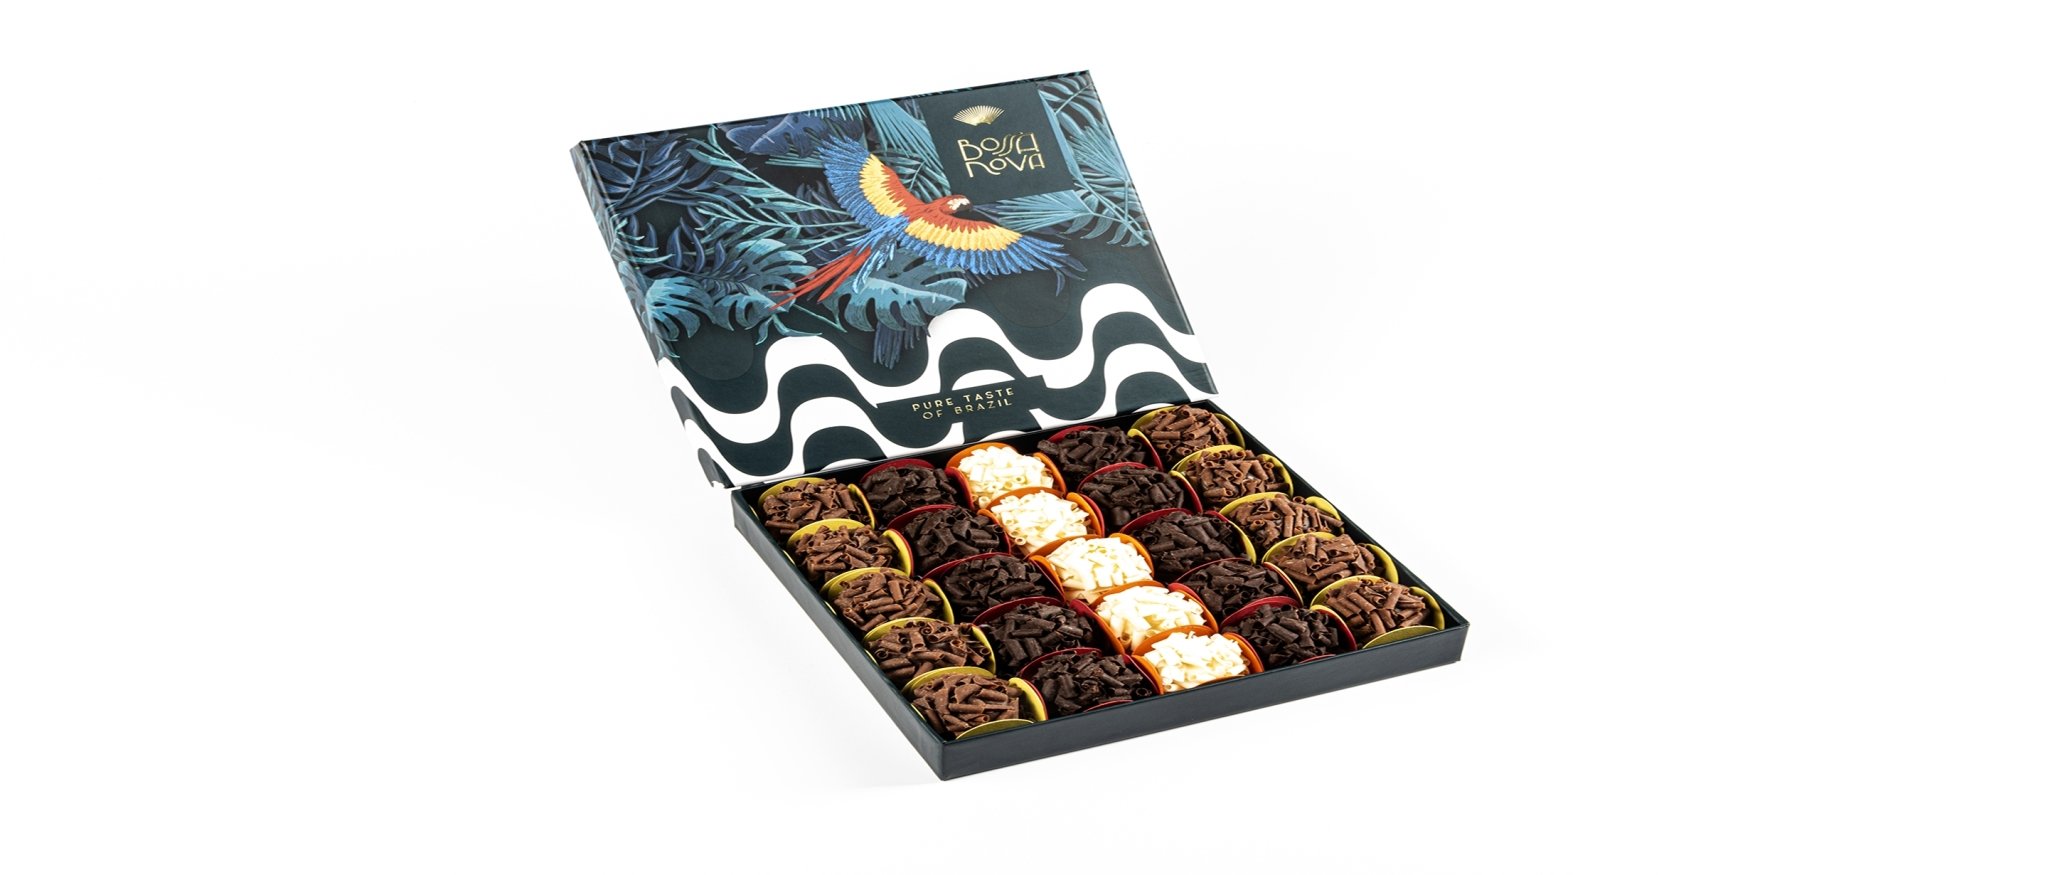 Alcohol free luxury chocolate gifts– Bossa Nova Chocolate